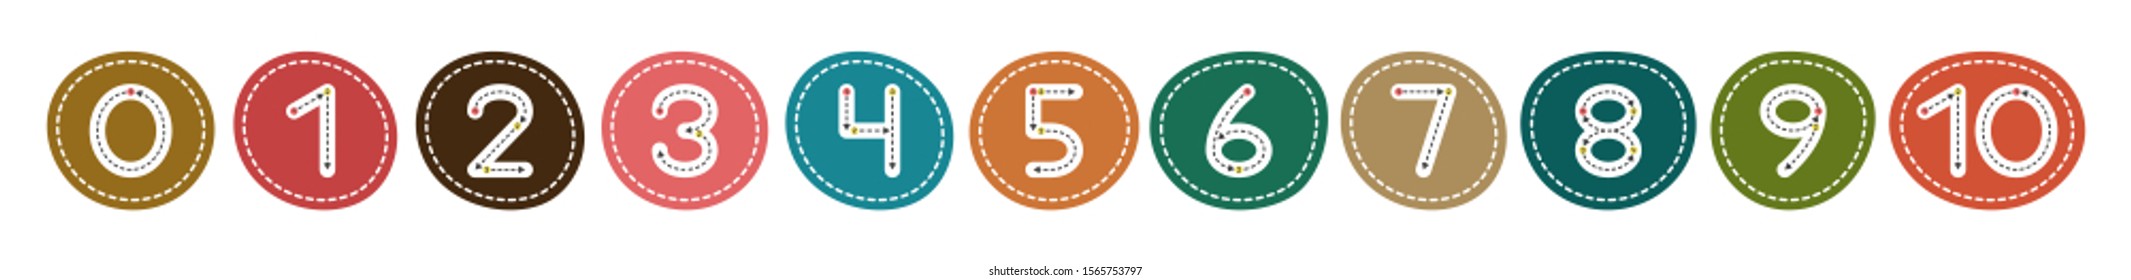 6,463 Number 0 Math Images, Stock Photos & Vectors | Shutterstock